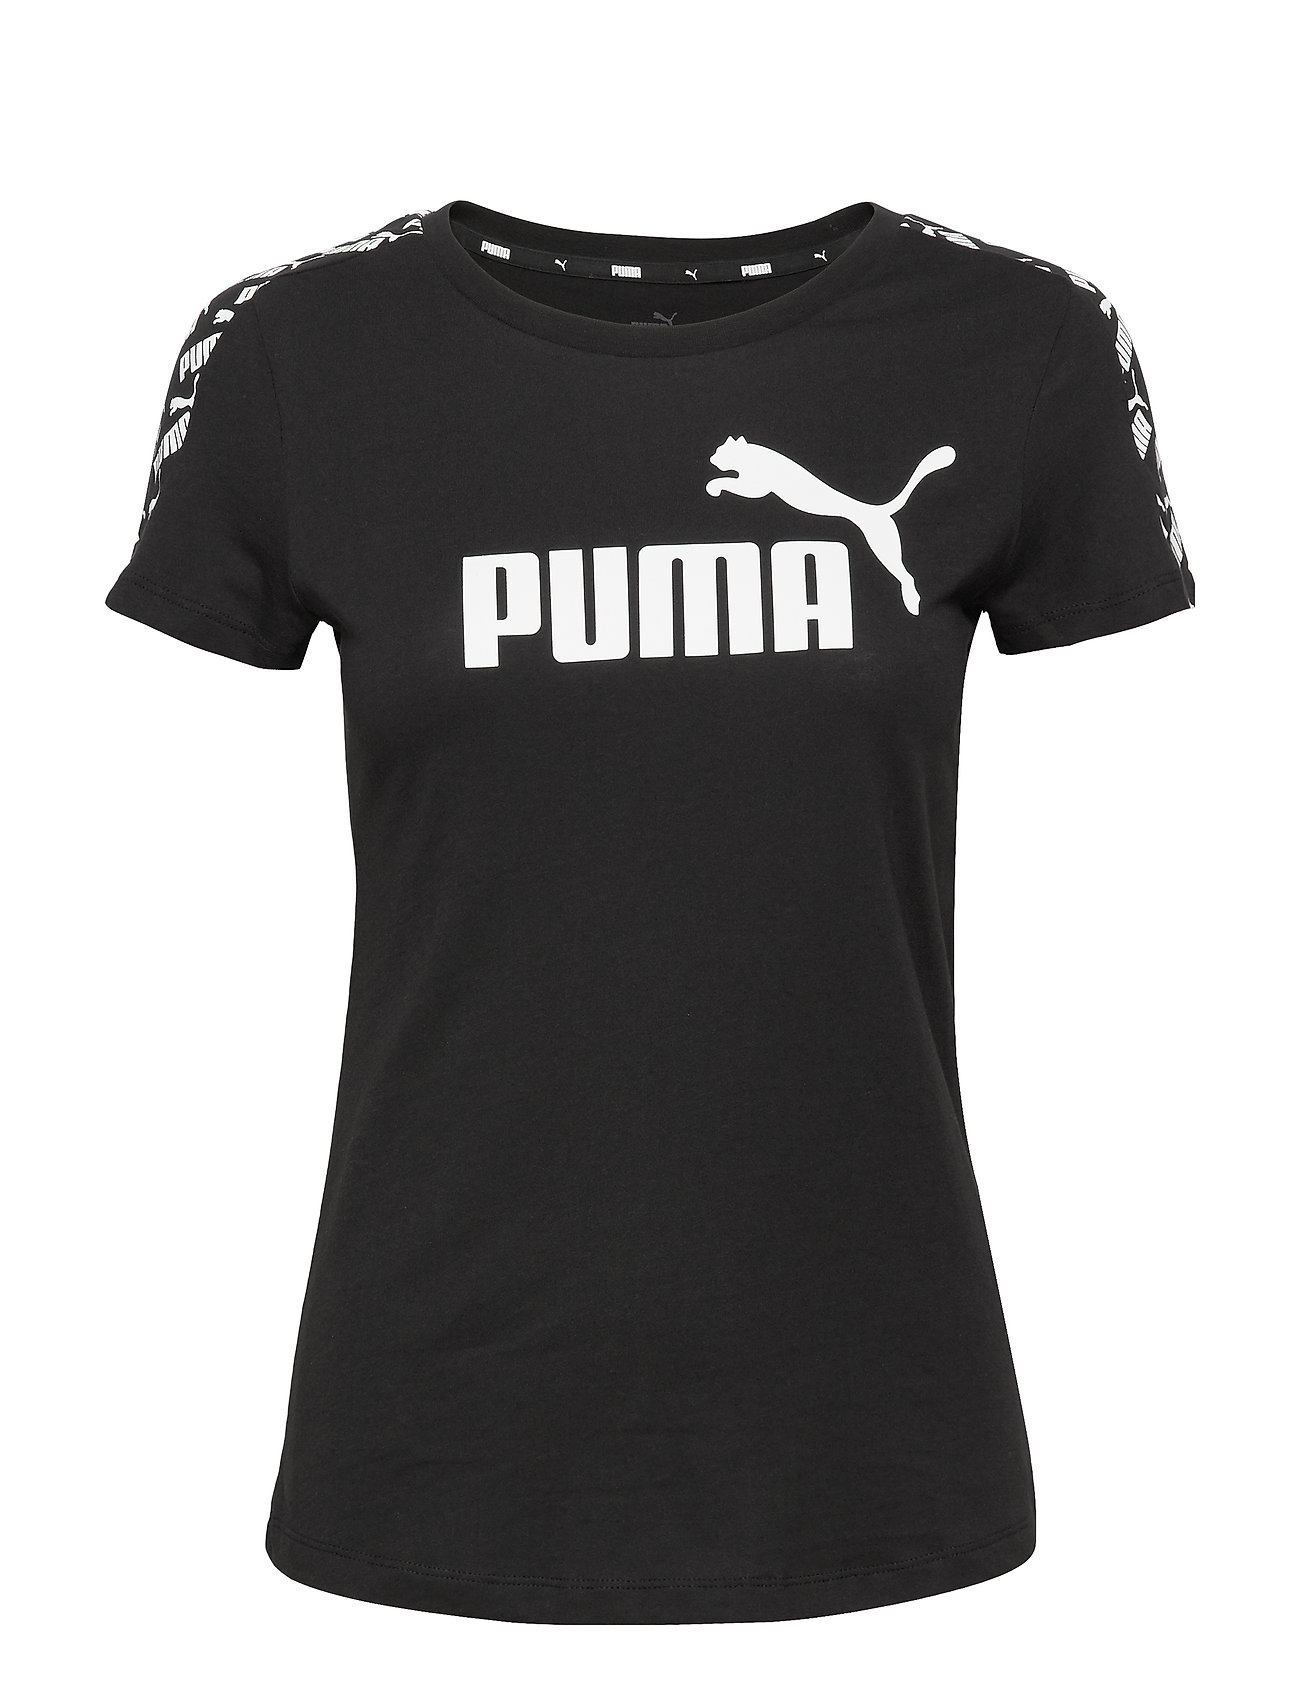 PUMA Amplified Tee (Puma Black), (14.95 